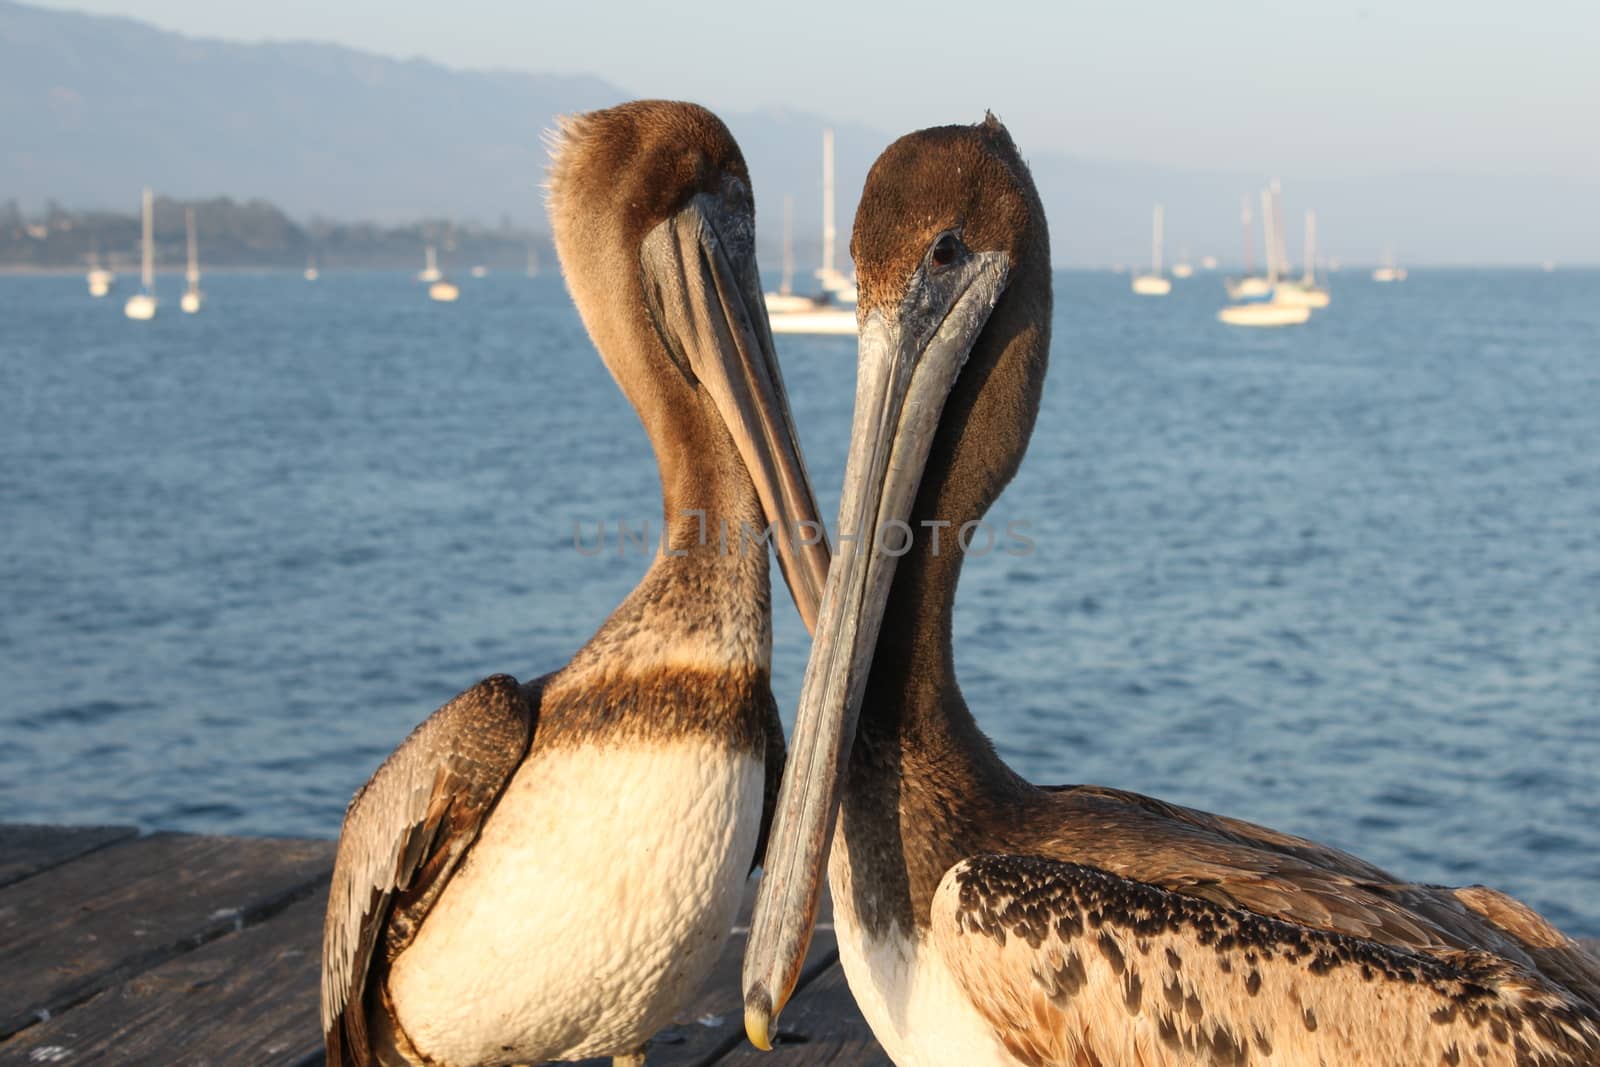 Two California pelicans on the Santa Barbara pier.